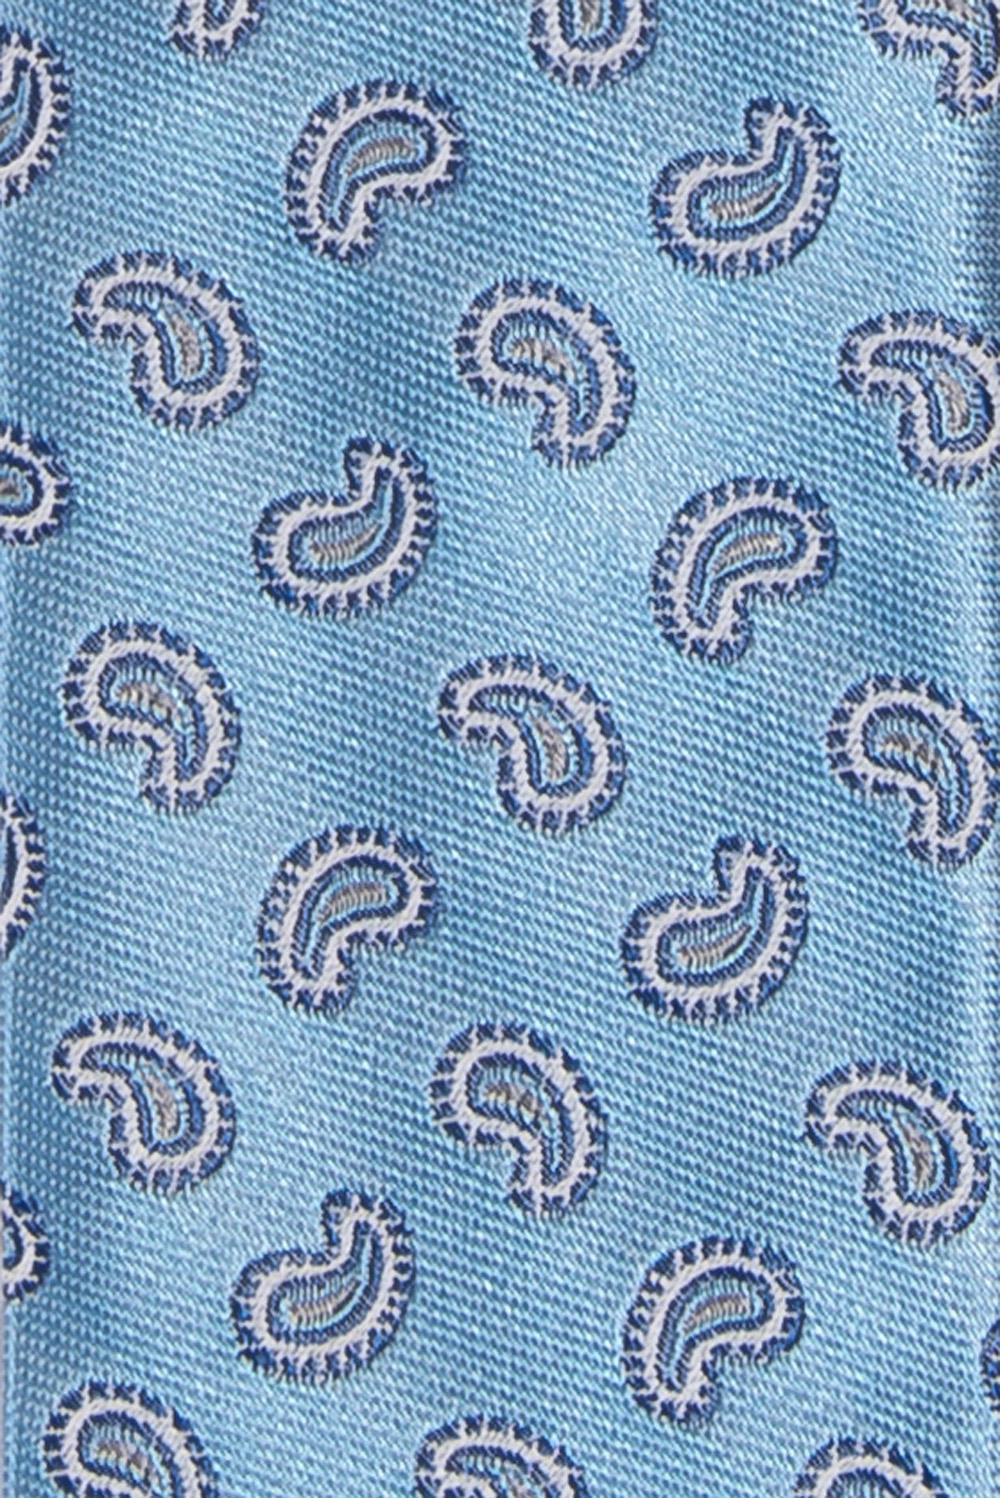 Cravata poliester bleu print floral 1